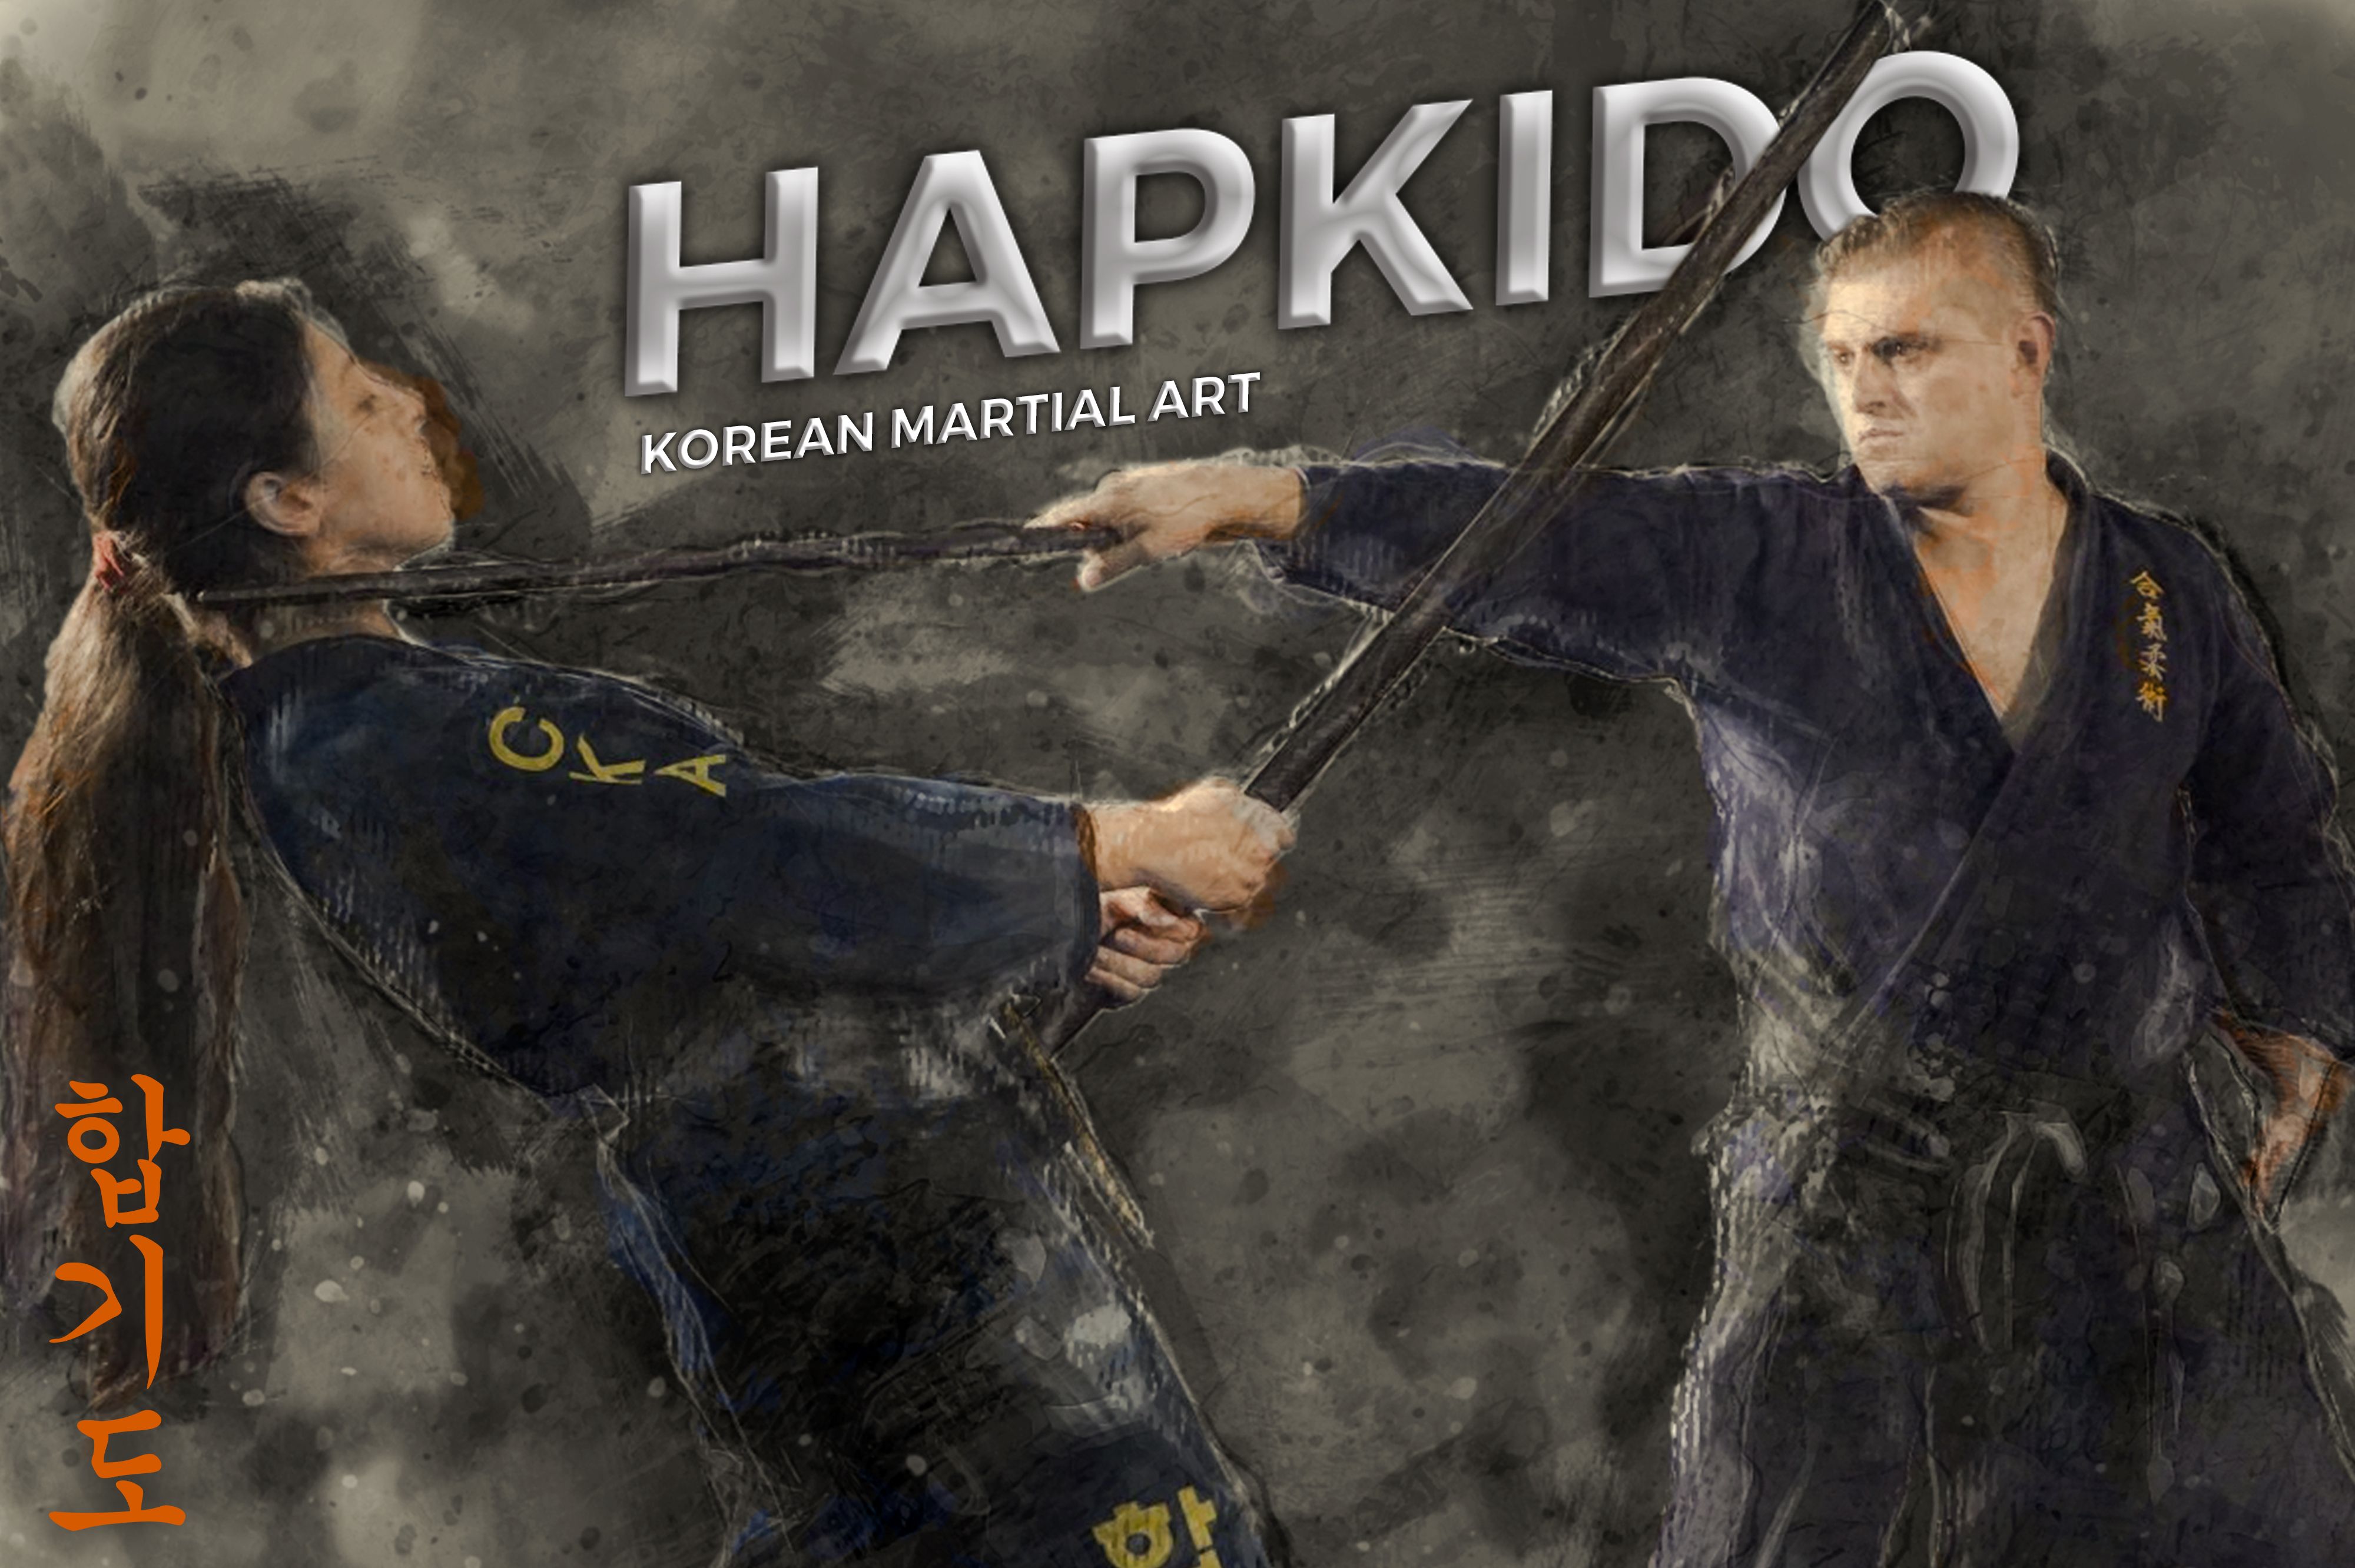 Hapkido wallpaper ideas. hapkido, wallpaper, korean martial arts